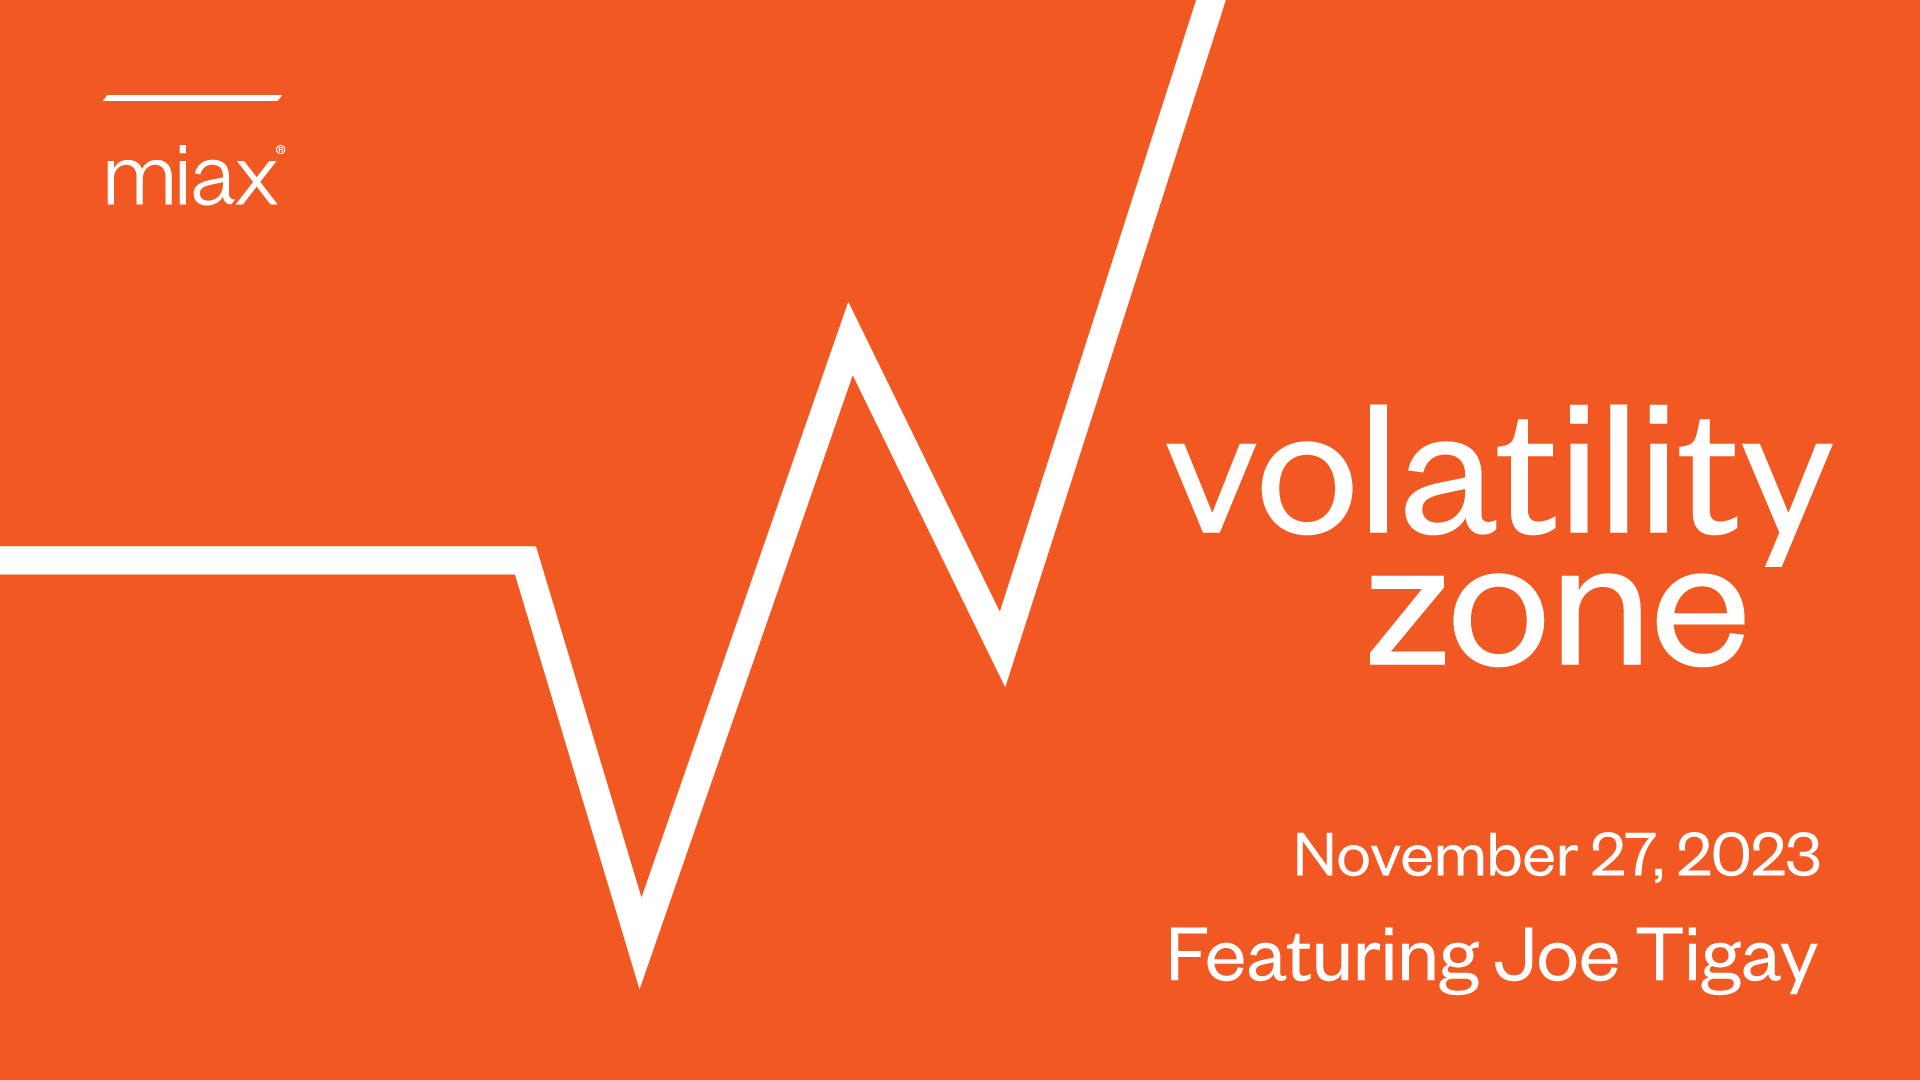 MIAX Volatility Zone November 27, 2023